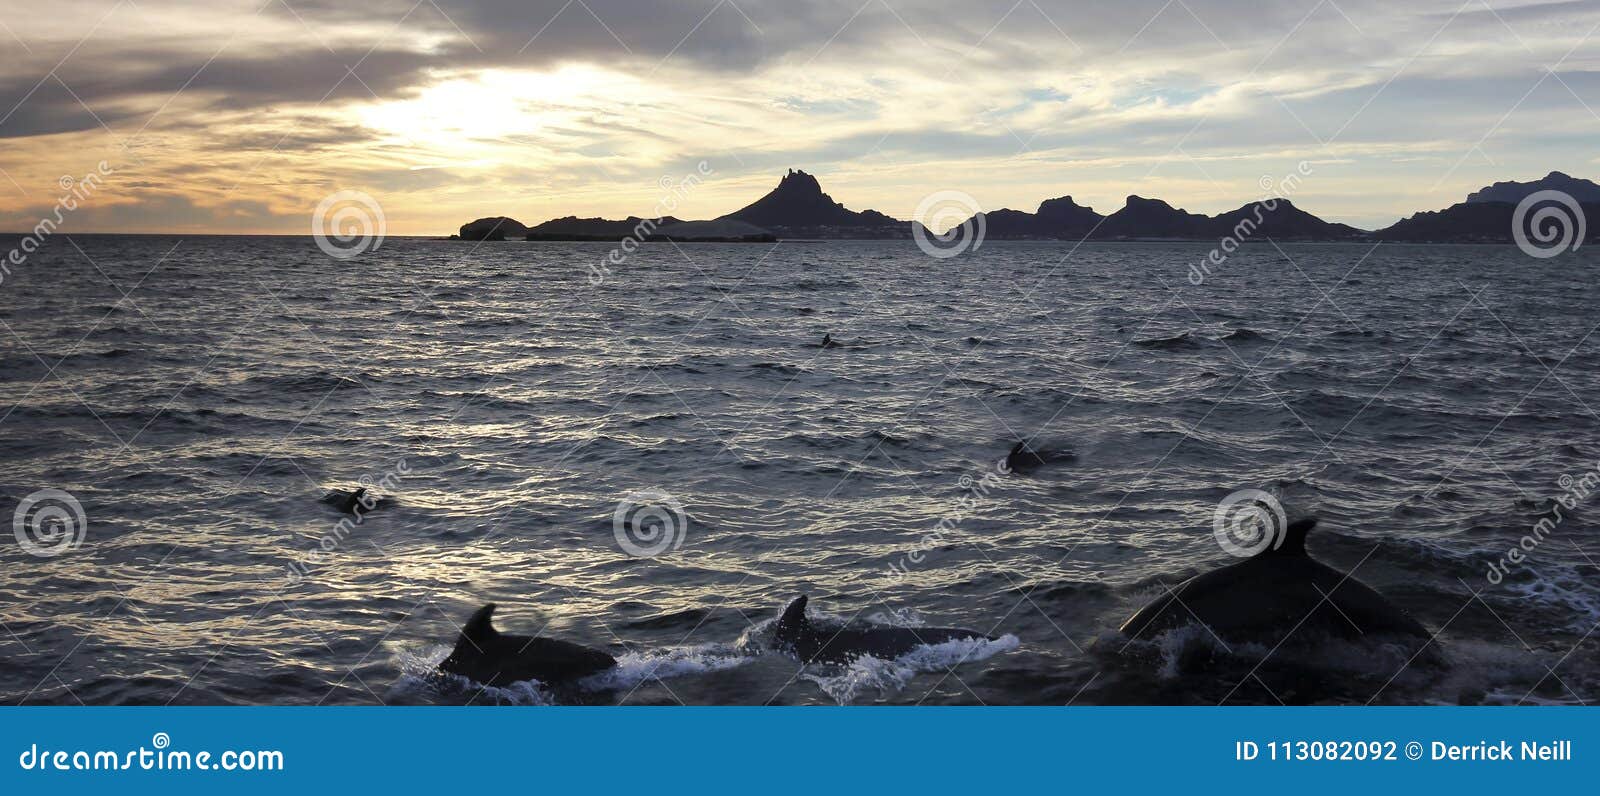 a scenic ocean view of a dolphin pod near san carlos, sonora, me